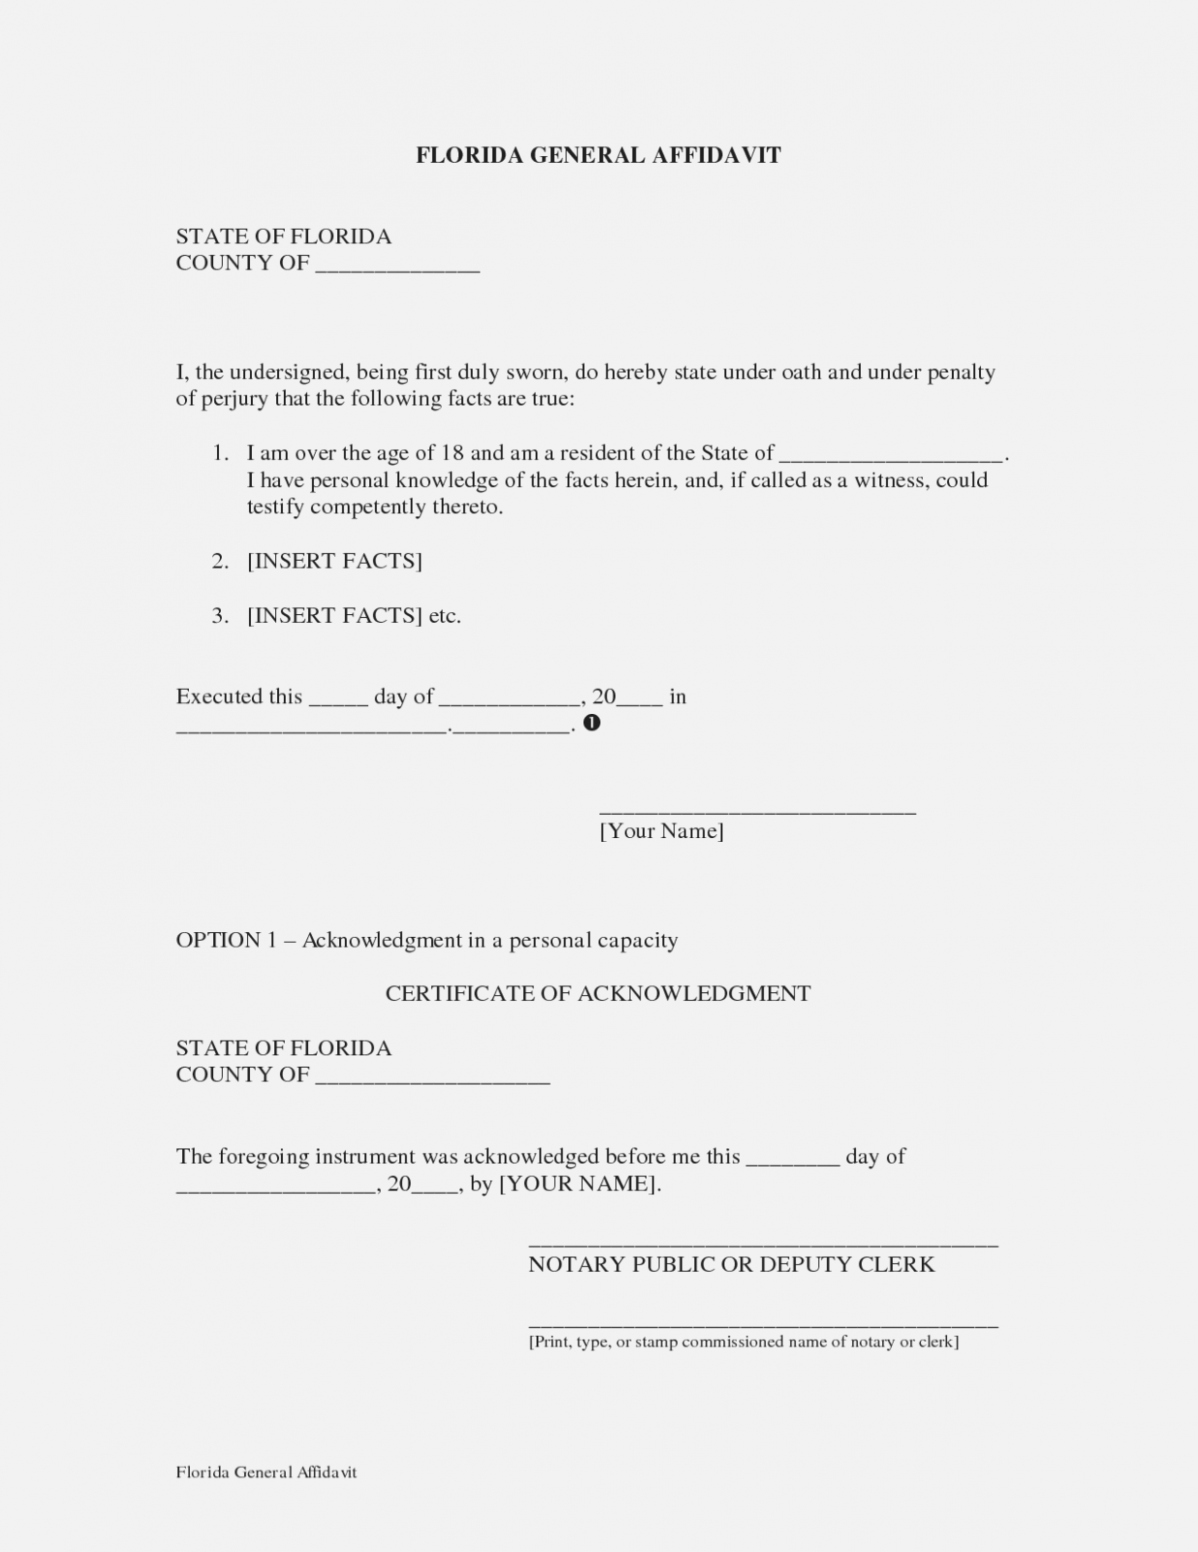 Free General Affidavit form Download Awesome General Affidavit Sample India Sworn Statement Template